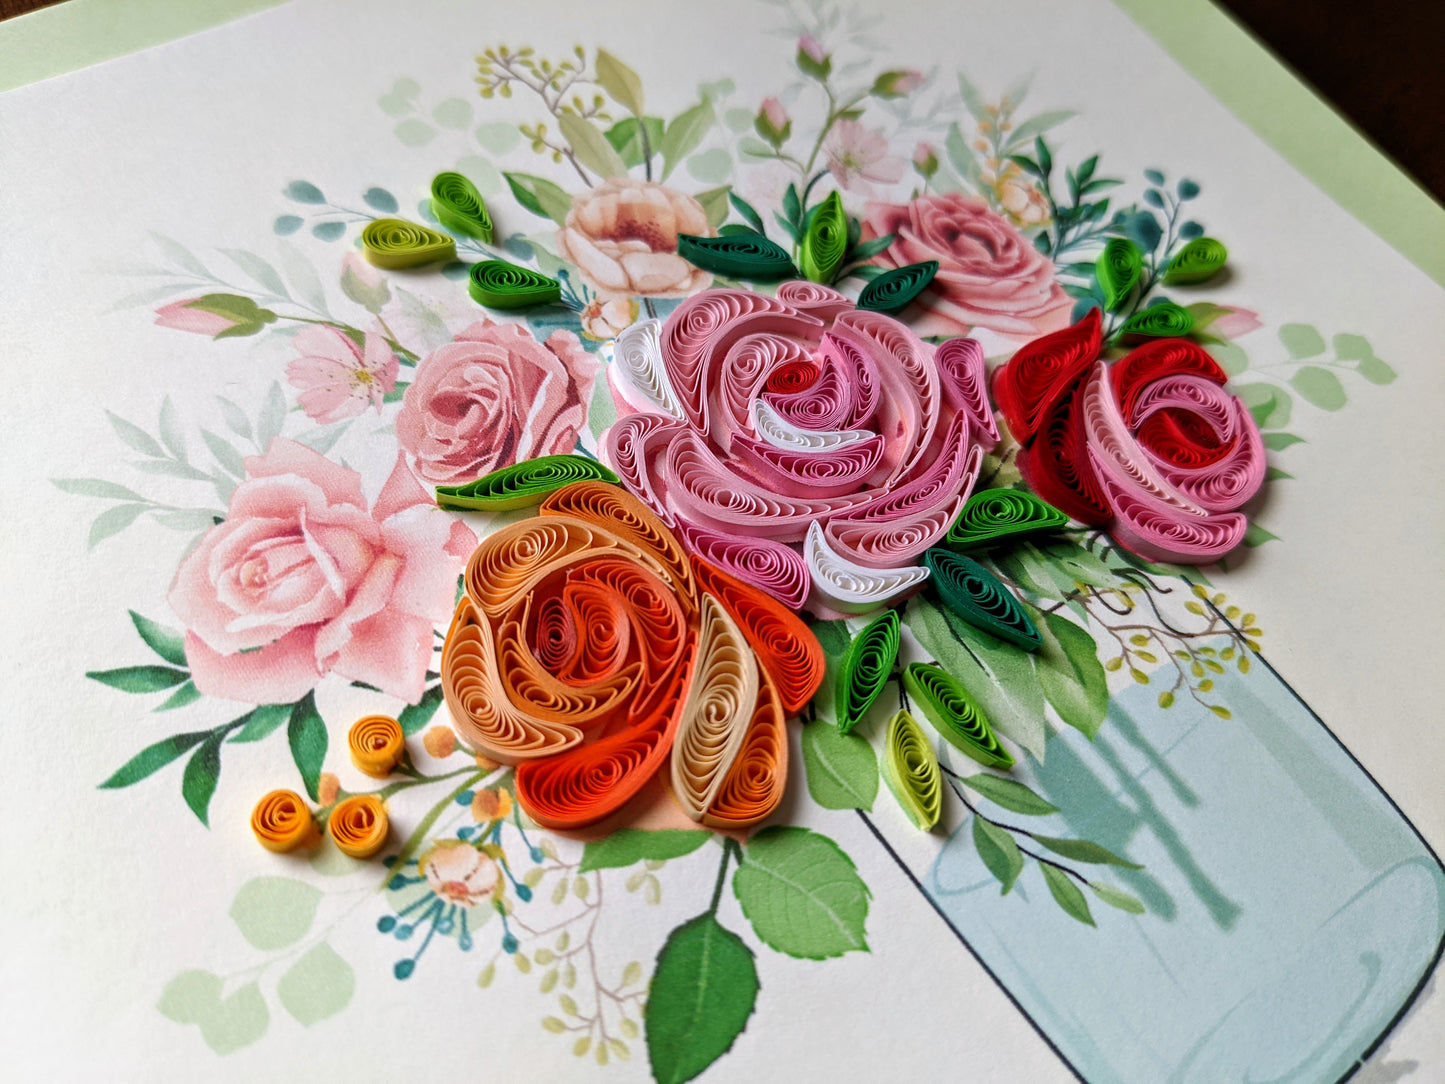 Rose Floral Arrangement Quilling Card